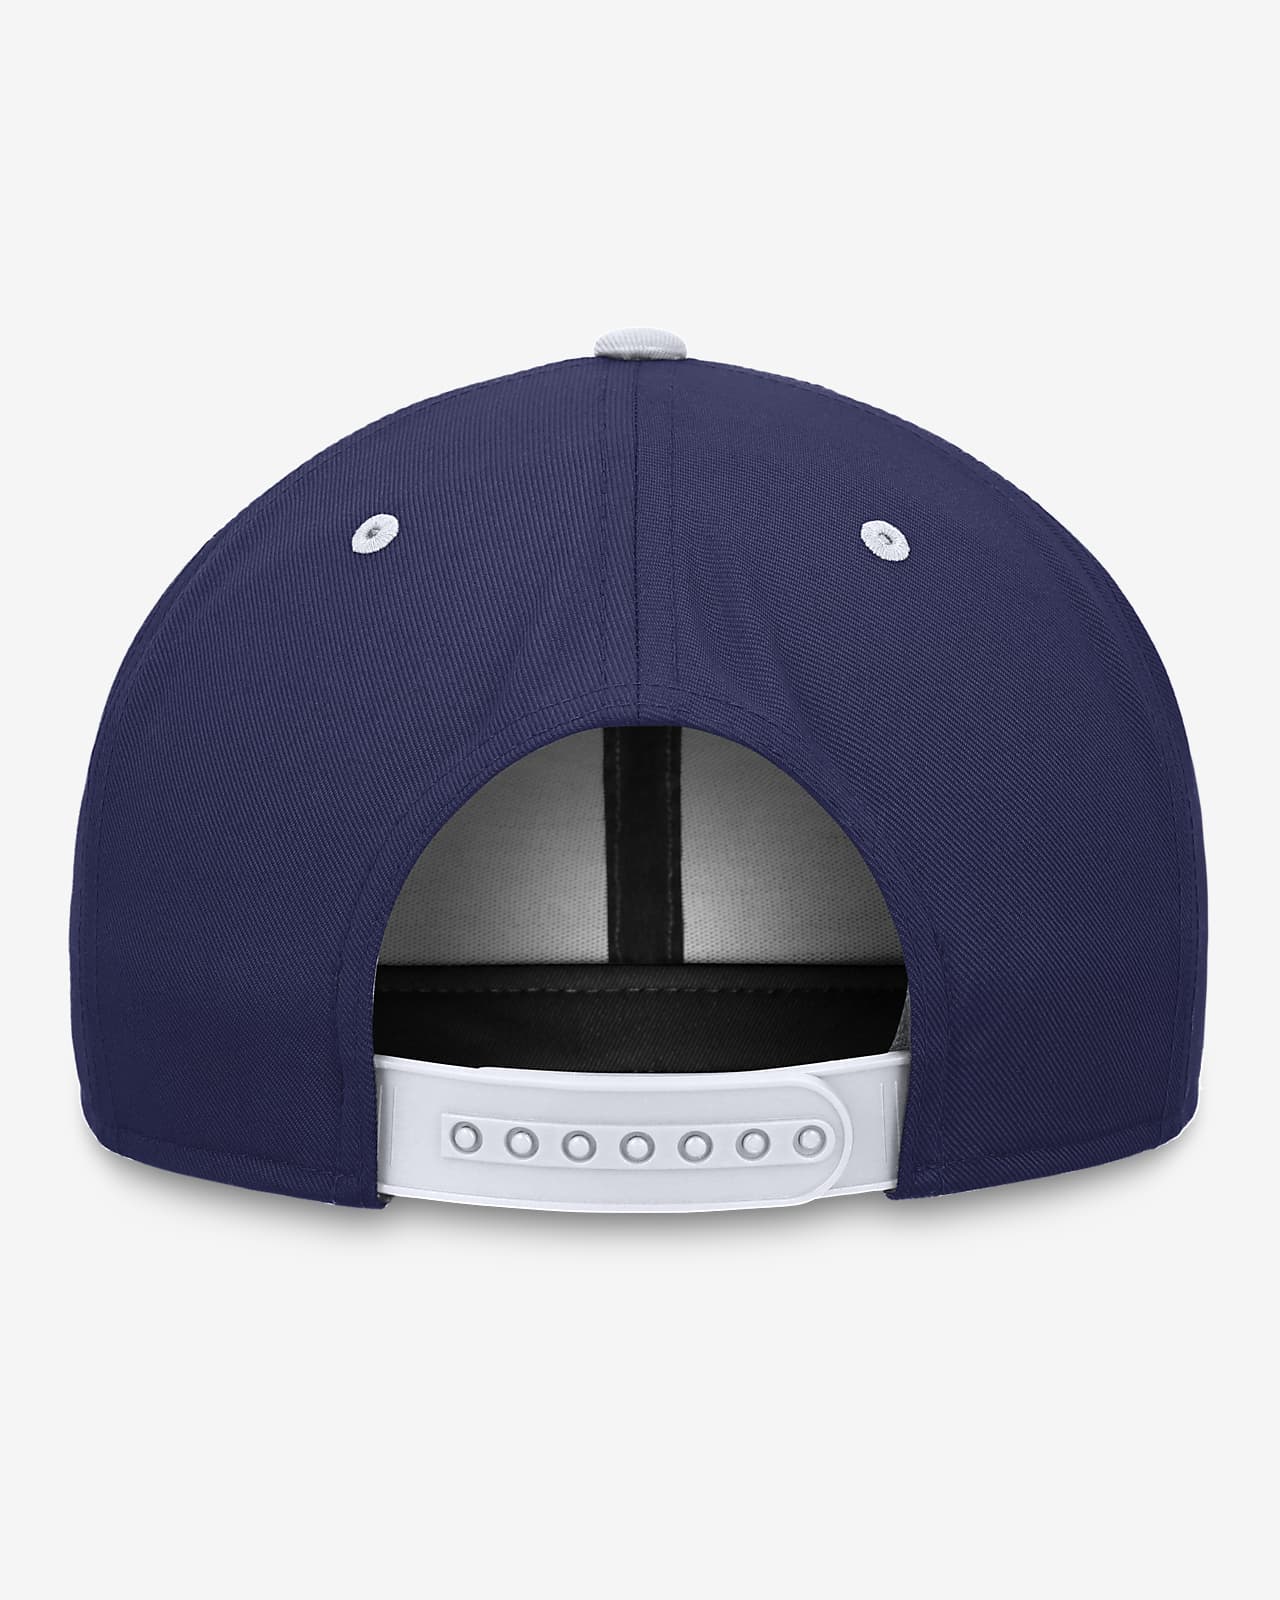 Brooklyn Dodgers Pro Cooperstown Men's Nike MLB Adjustable Hat.